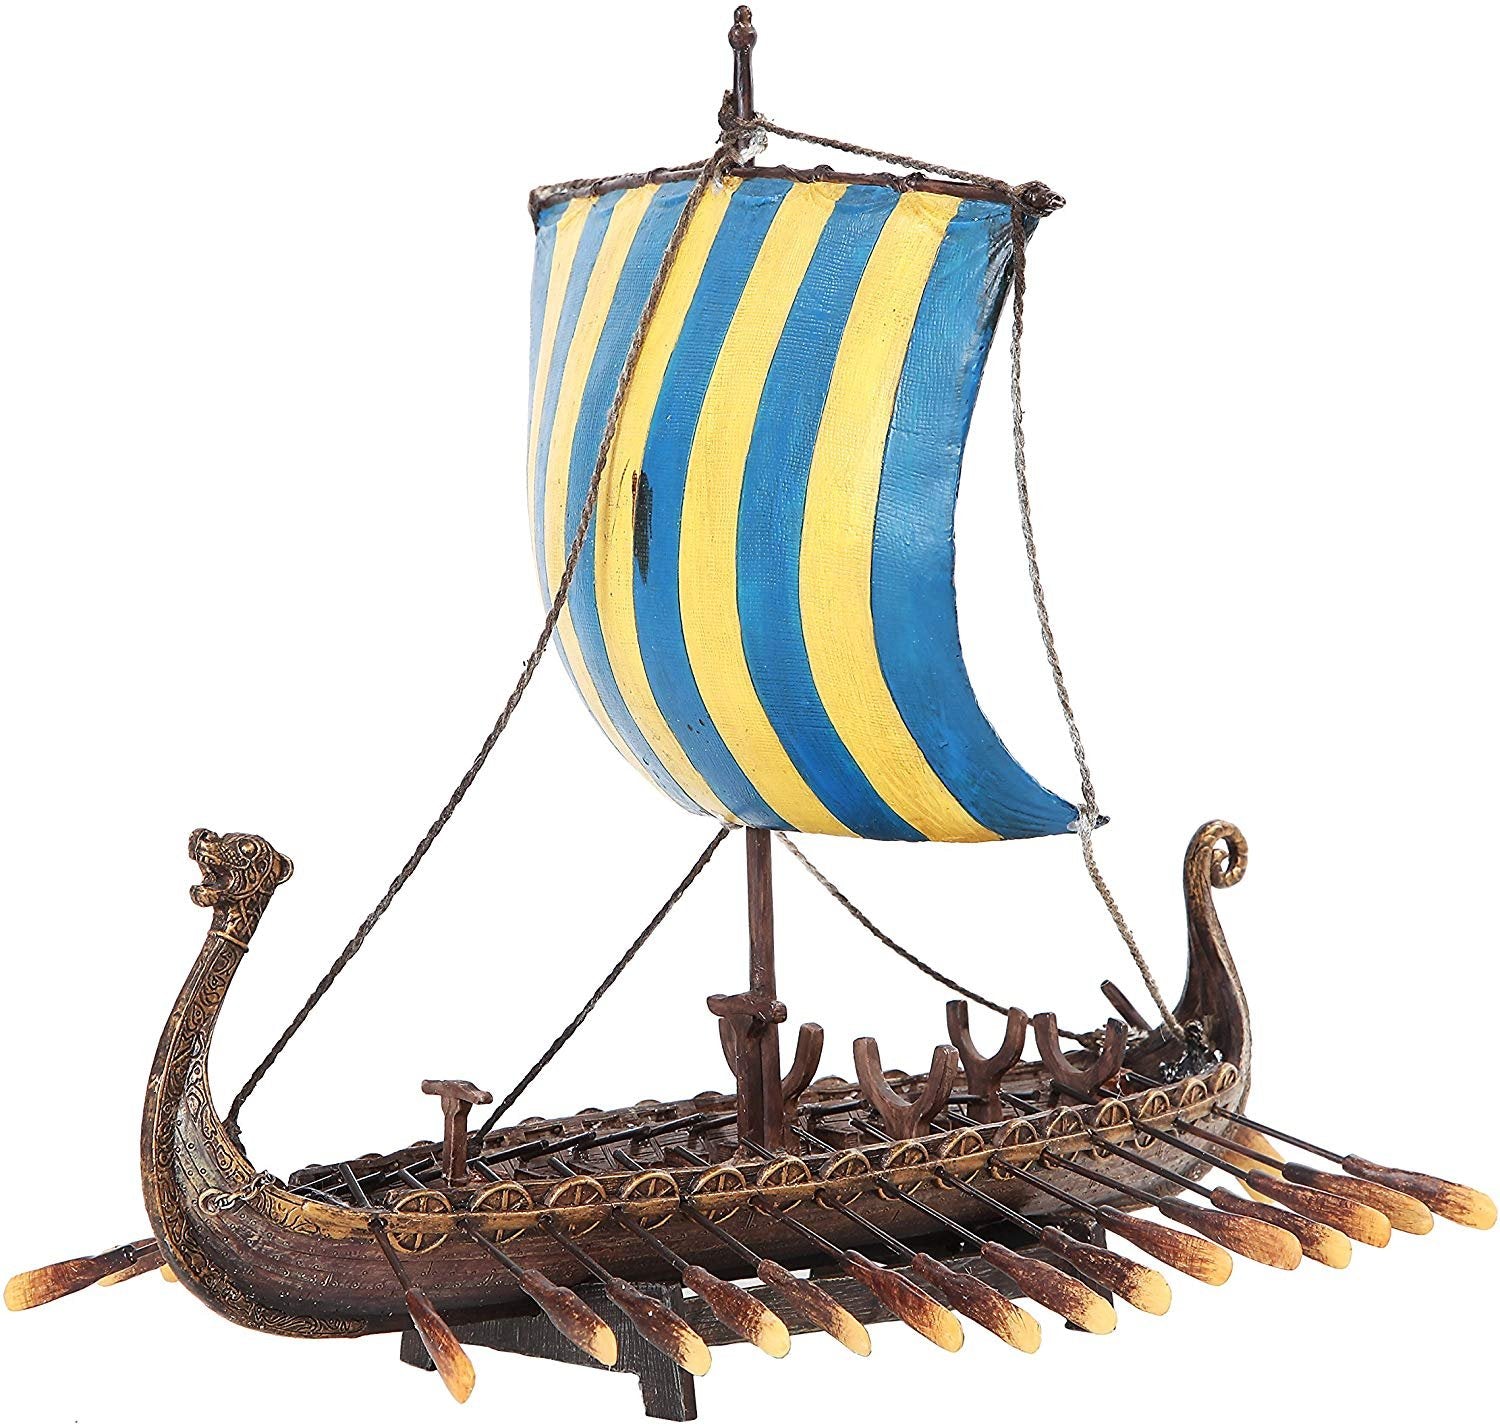 PTC 12.75 Inch Viking Warrior Replica Sailing Ship Resin Statue Figurine